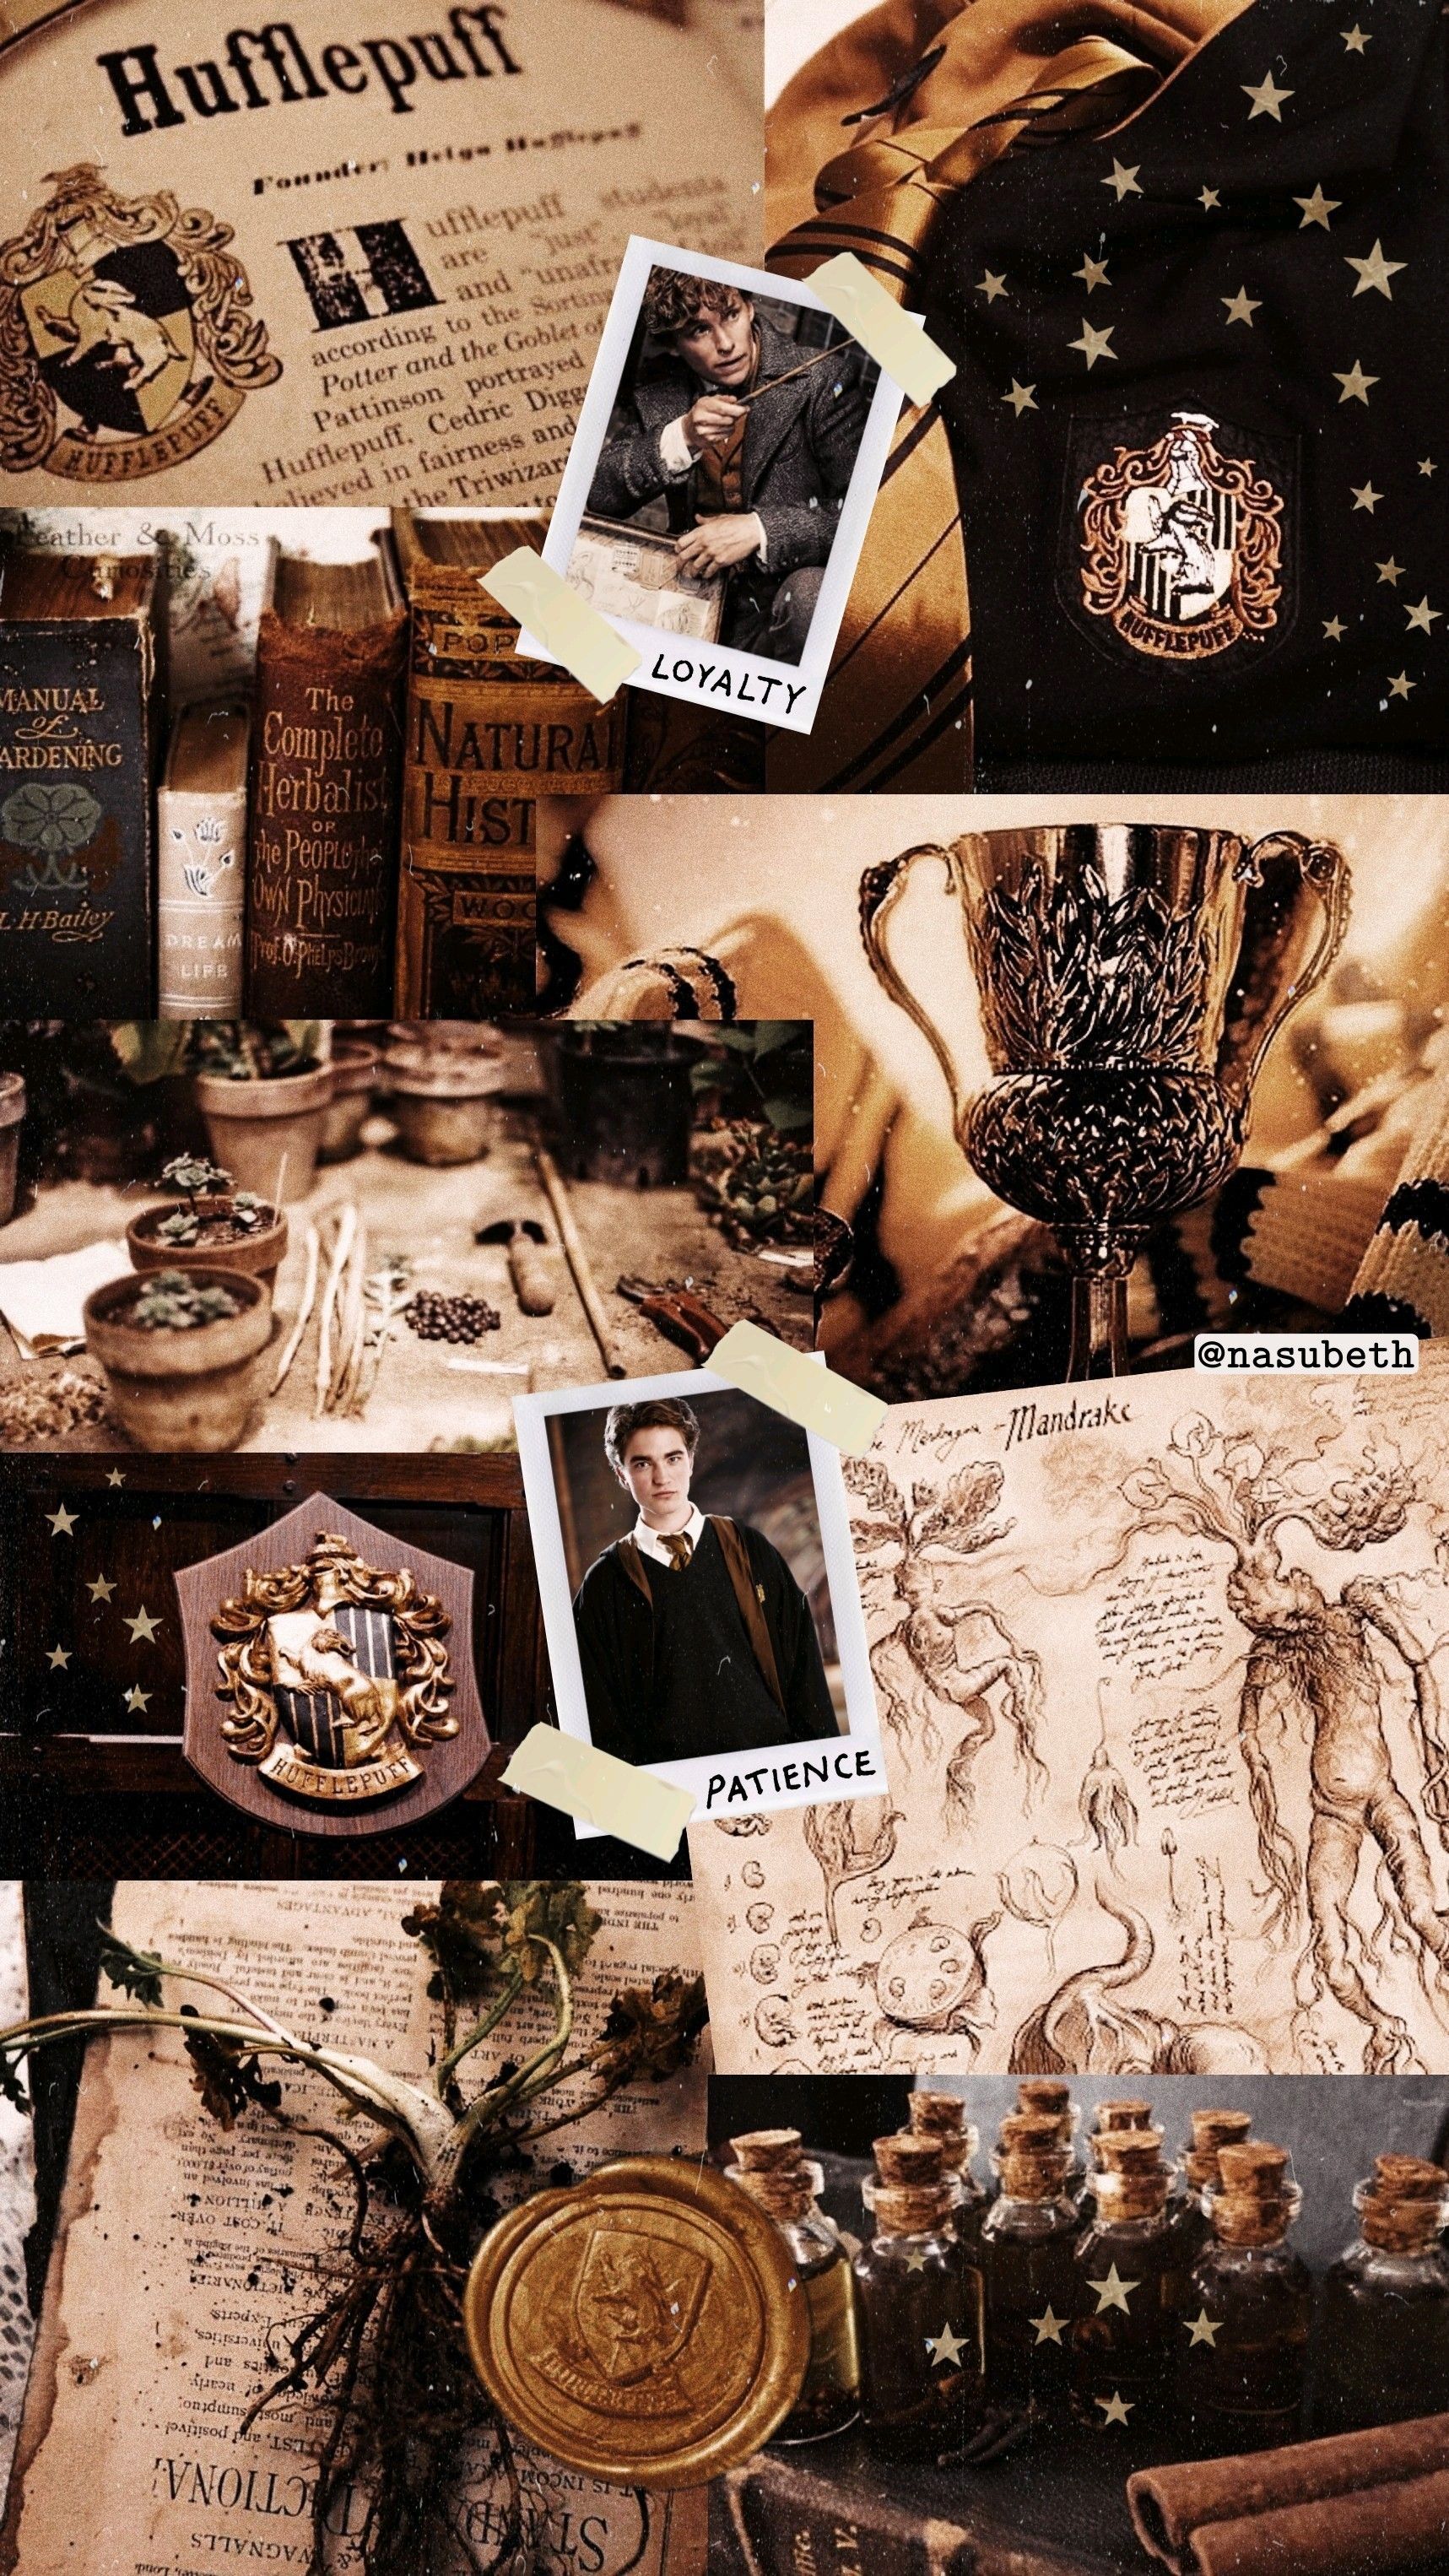 hogwarts #hogwartsismyhome #hogwartshouses #hogwartsexpress #jkrowling # harrypotter #harryp. Harry potter background, Harry potter image, Harry potter wallpaper